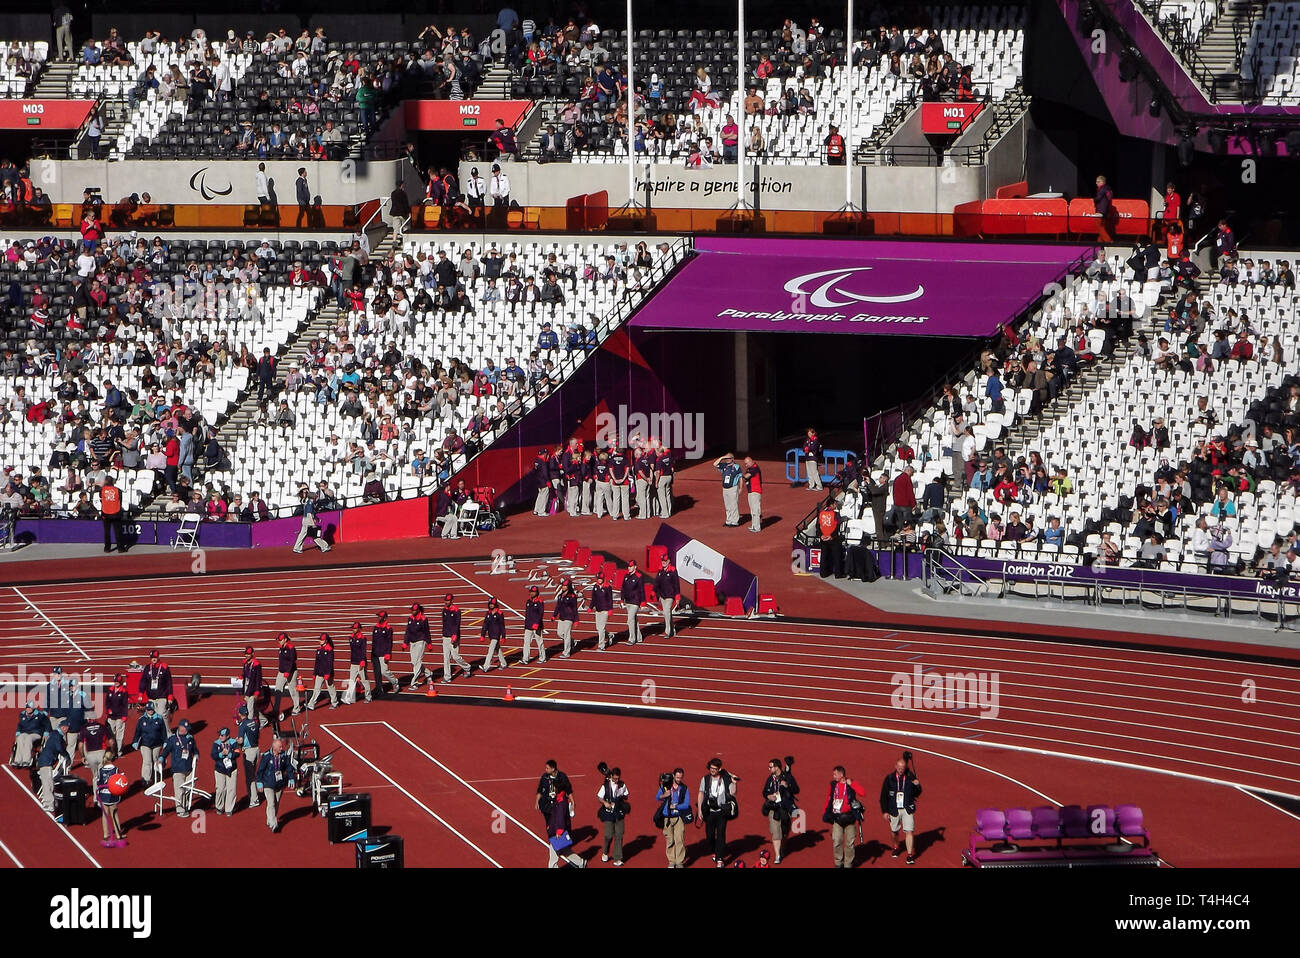 Stadium at Queen Elizabeth Park, London, during the 2012 Paralympics Stock Photo